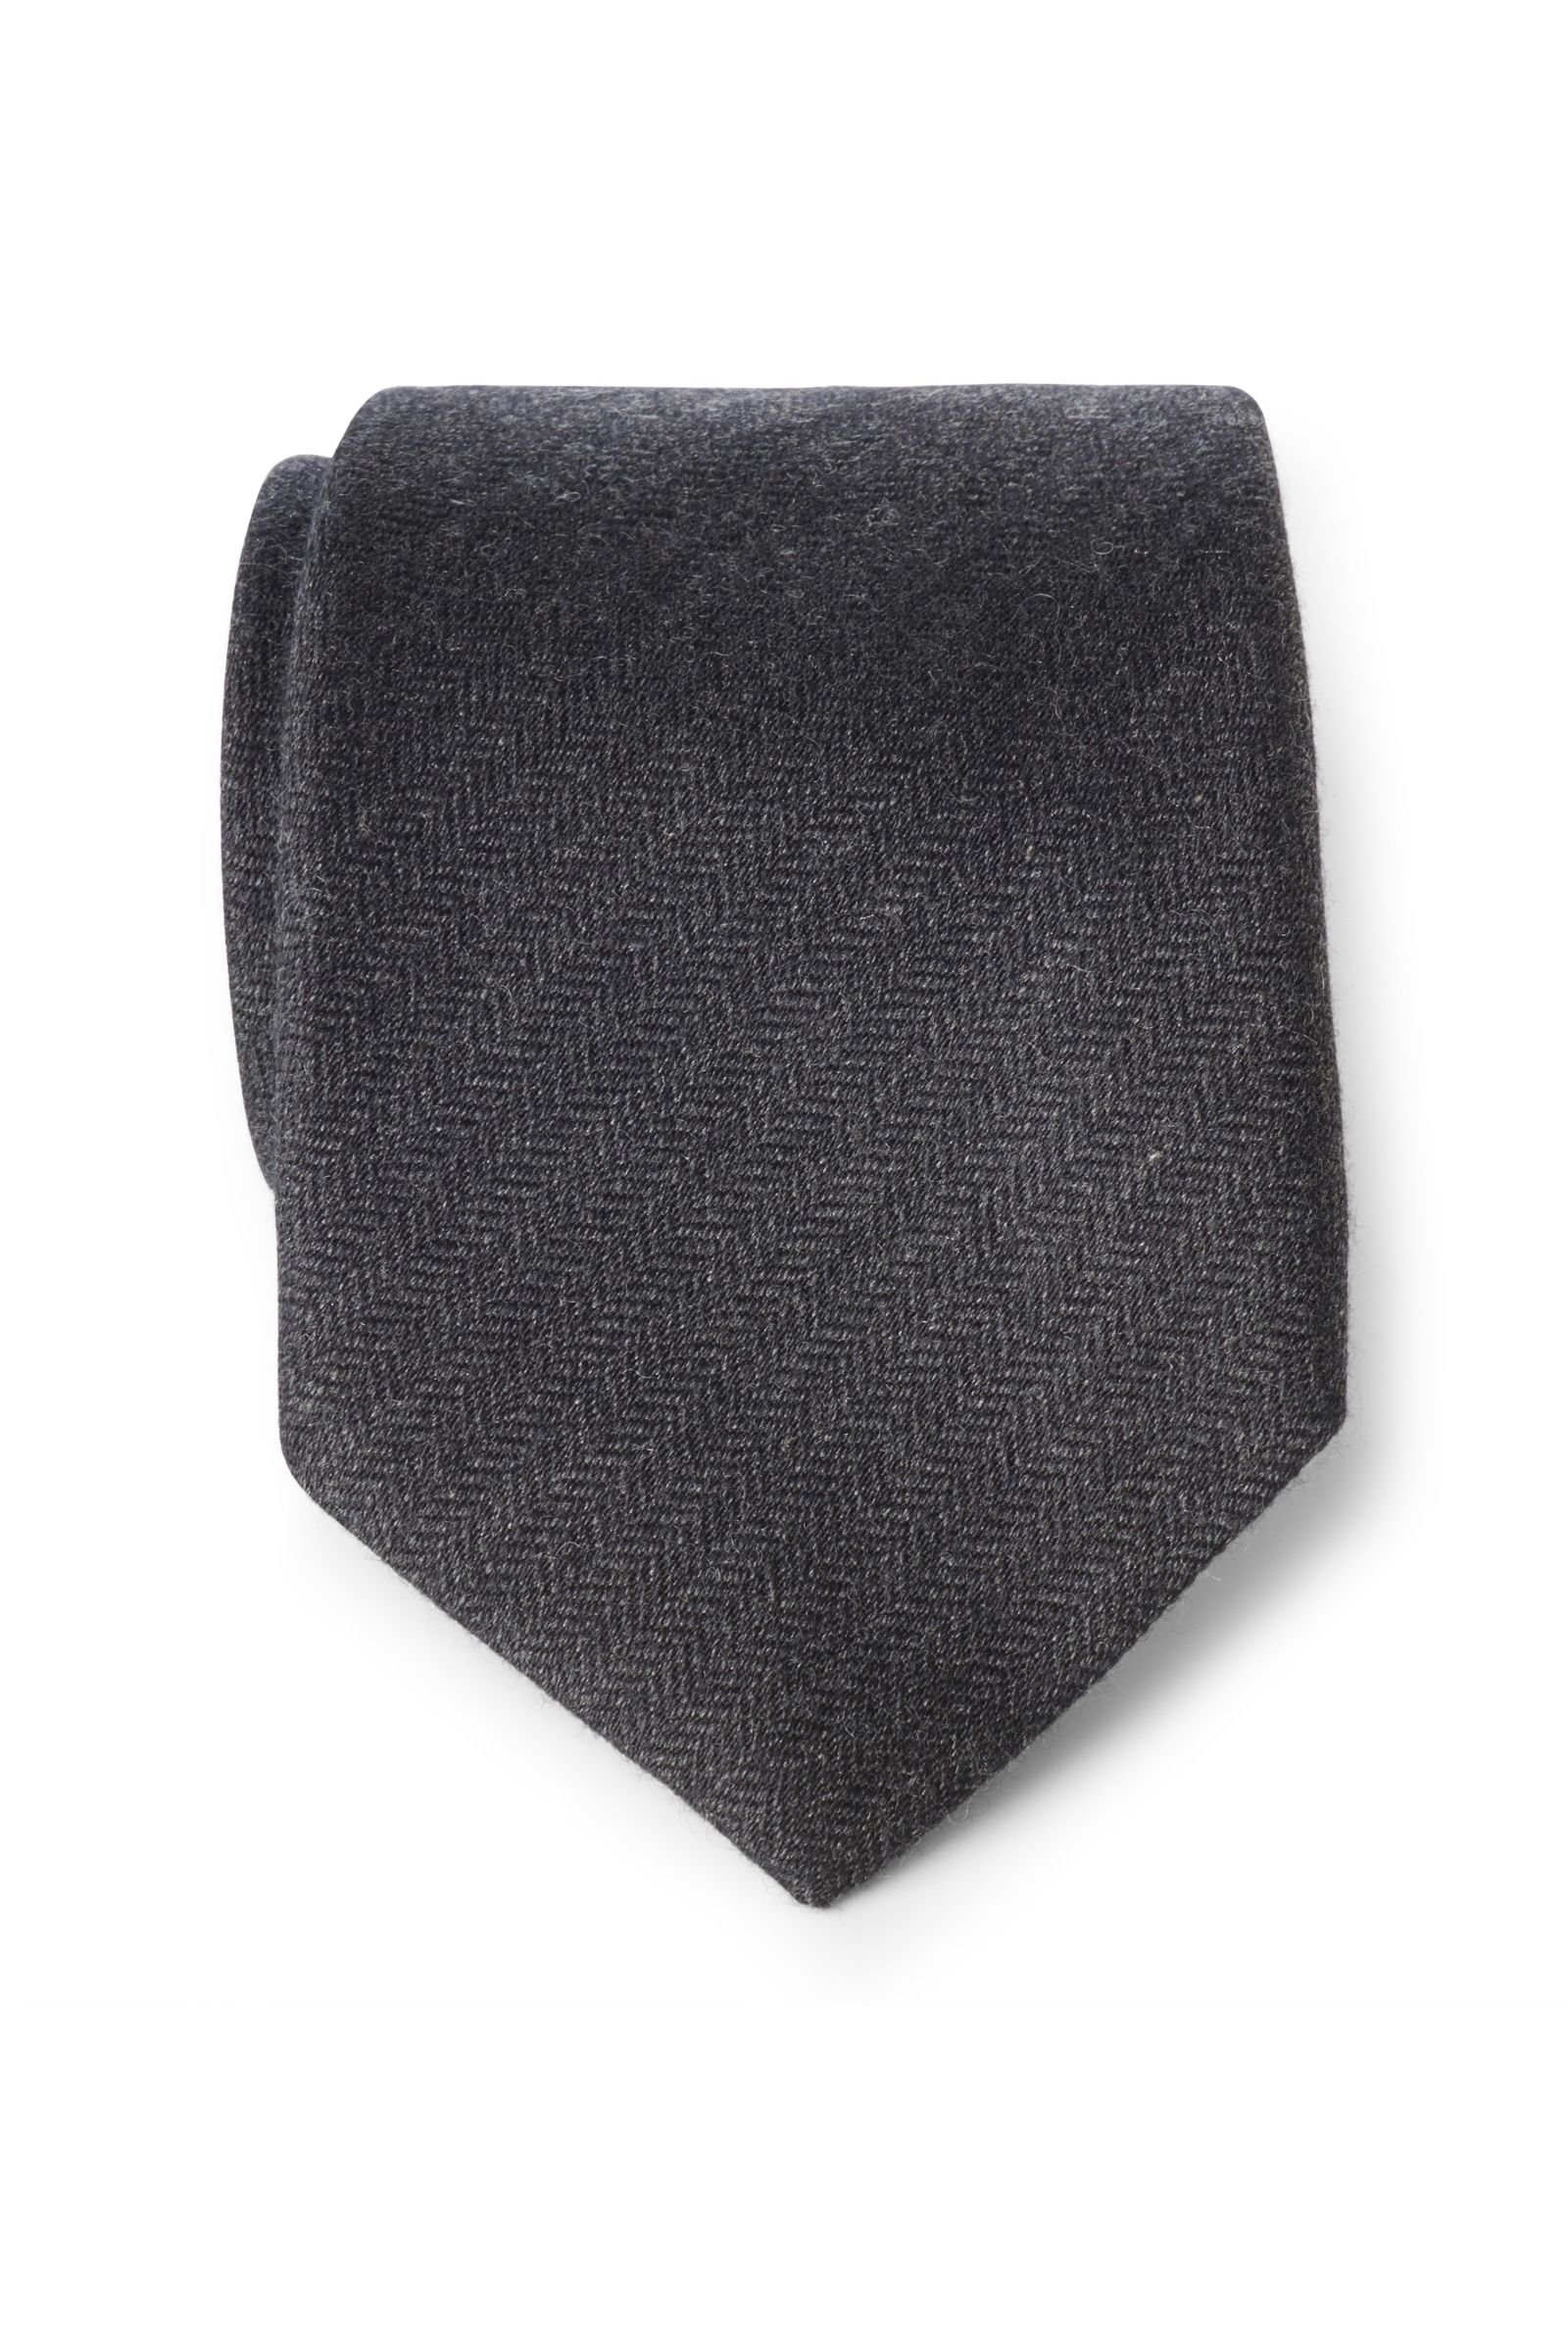 Krawatte dunkelgrau